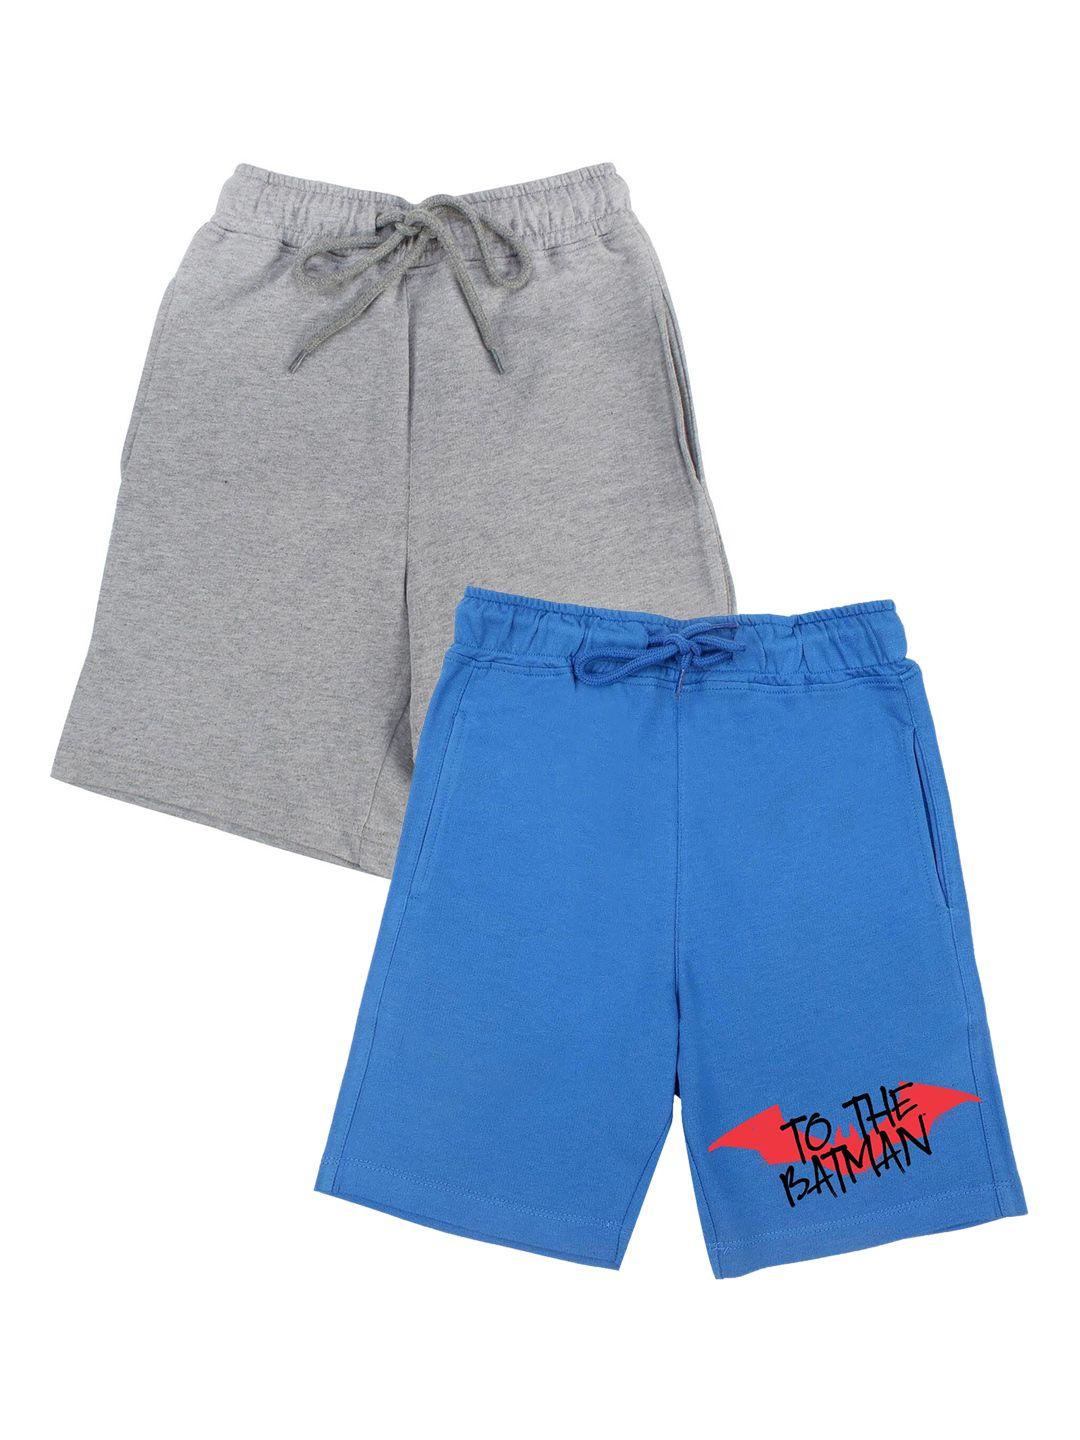 dc-by-wear-your-mind-boys-set-of-2-blue-&-grey-batman-outdoor-shorts